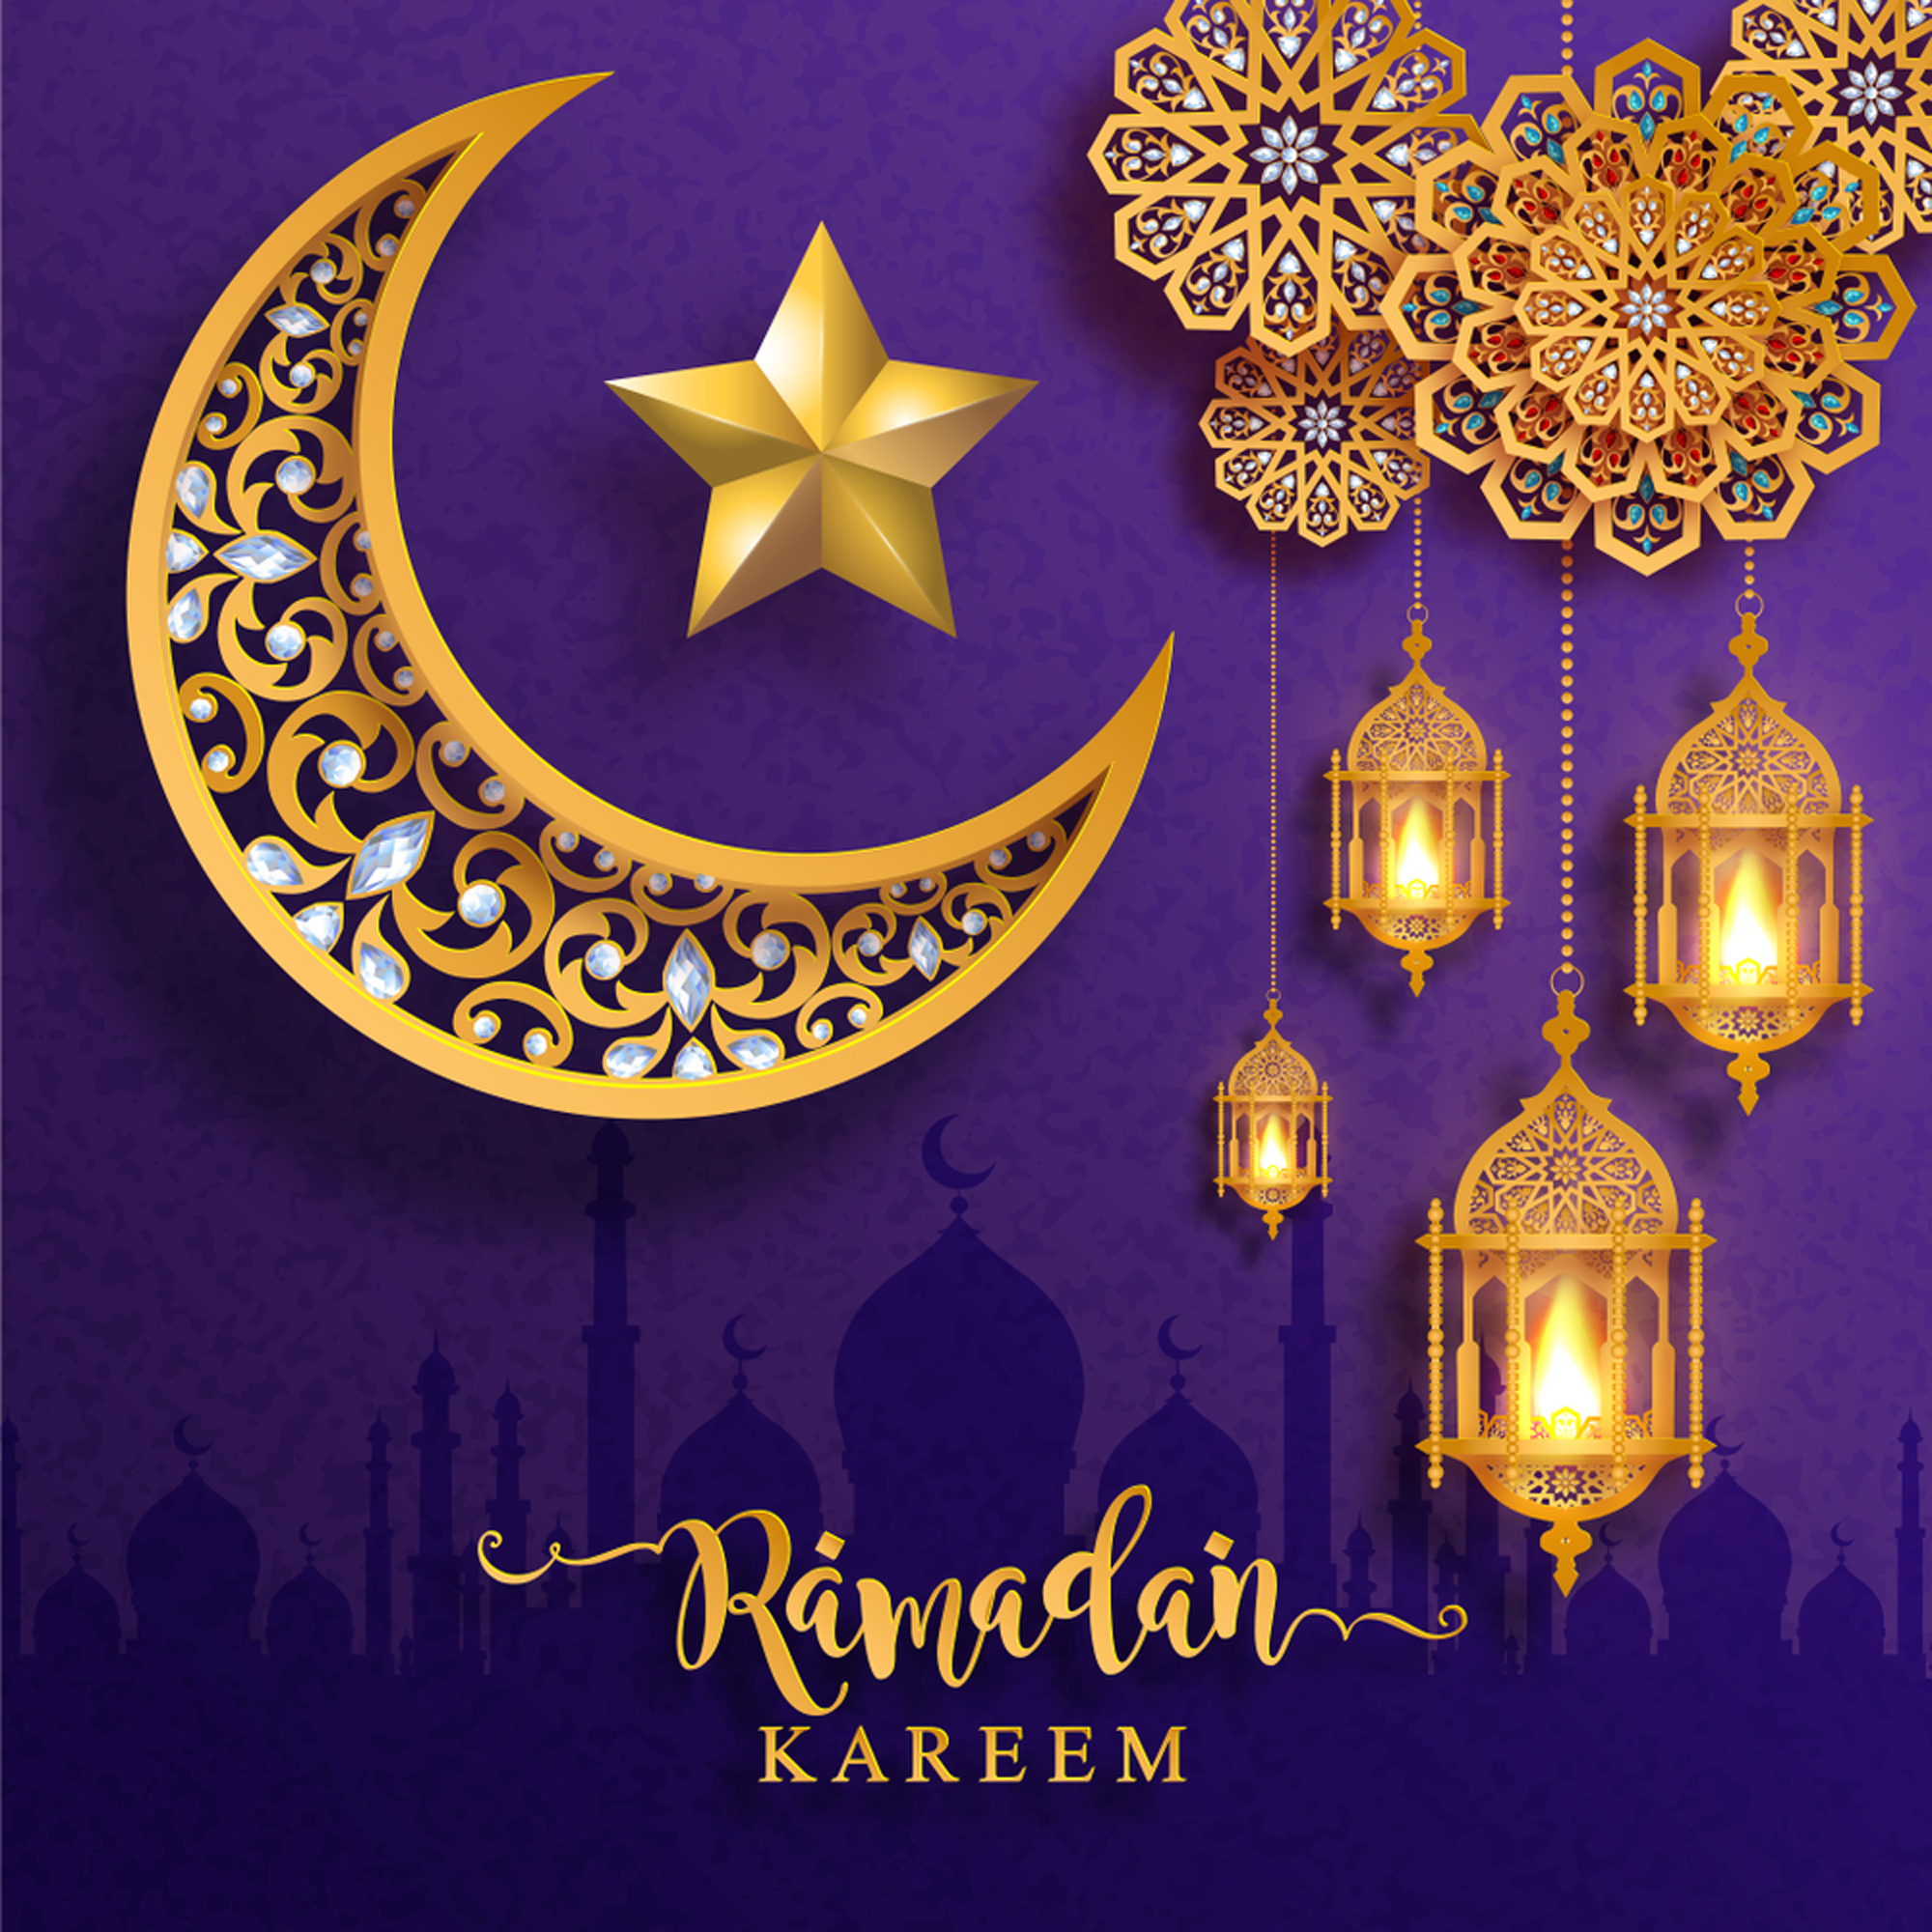 Ramadan Images | Free HD Backgrounds, PNGs, Vectors & Templates - rawpixel